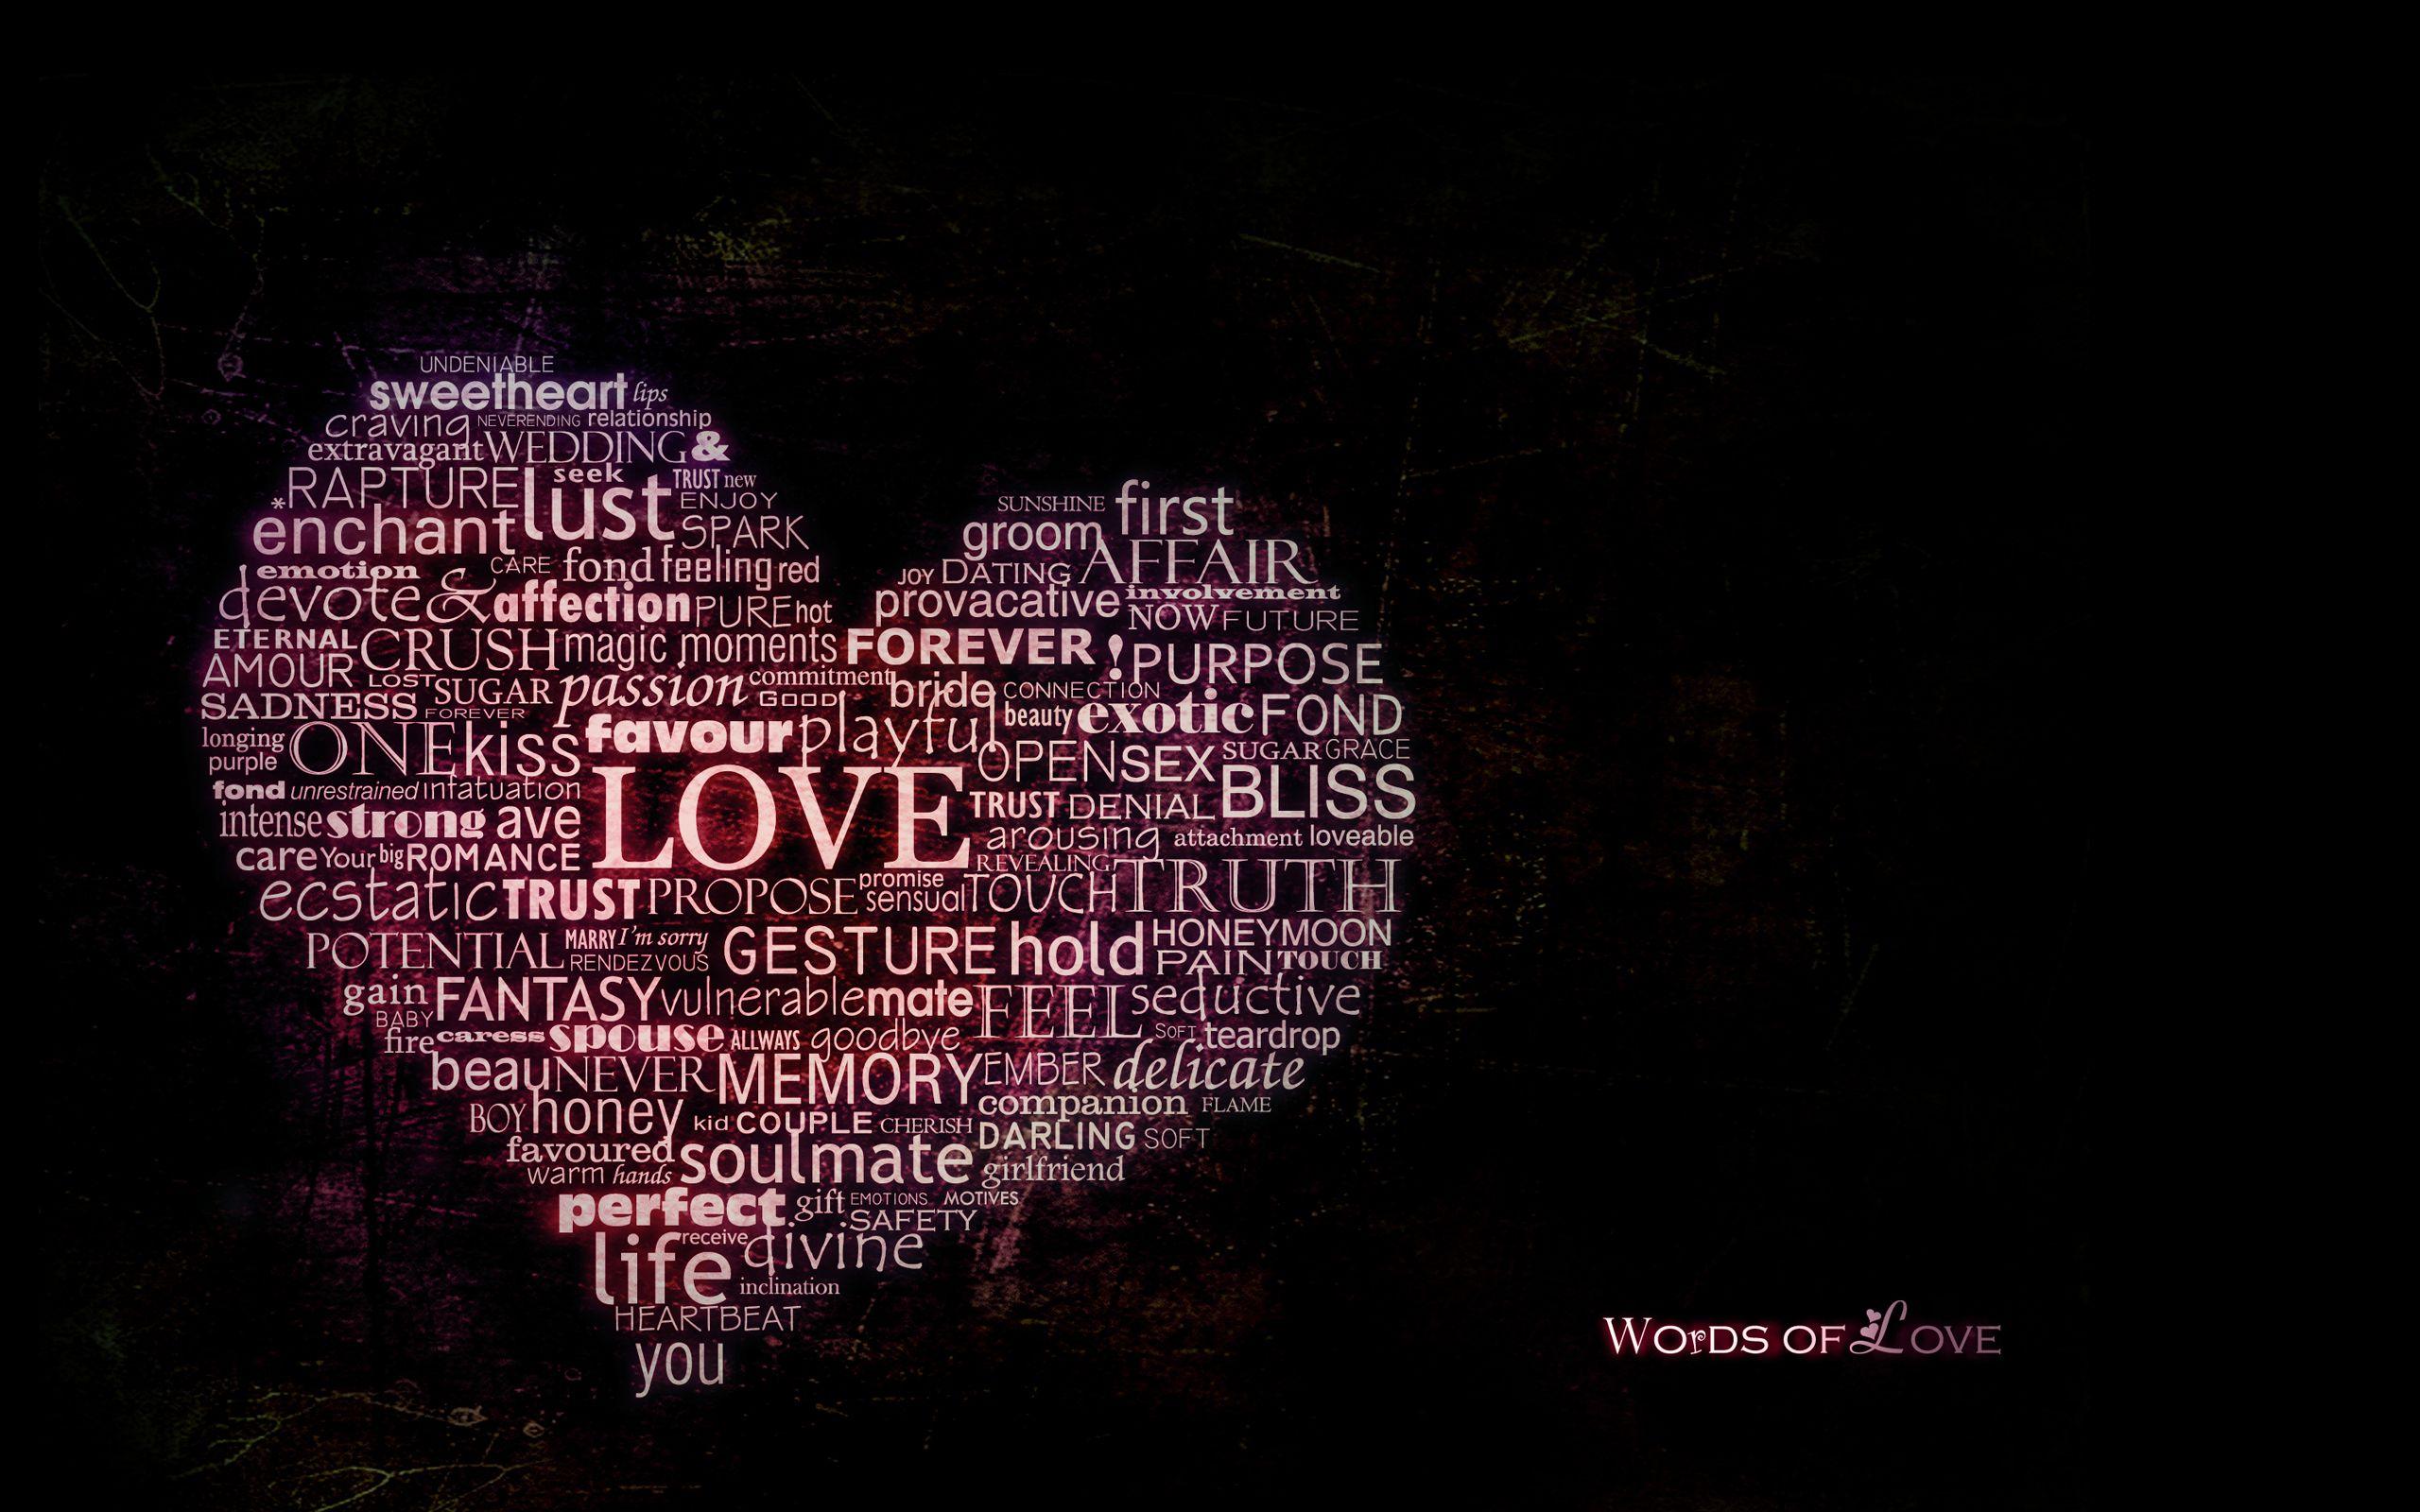 Words of love desktop PC and Mac wallpaper